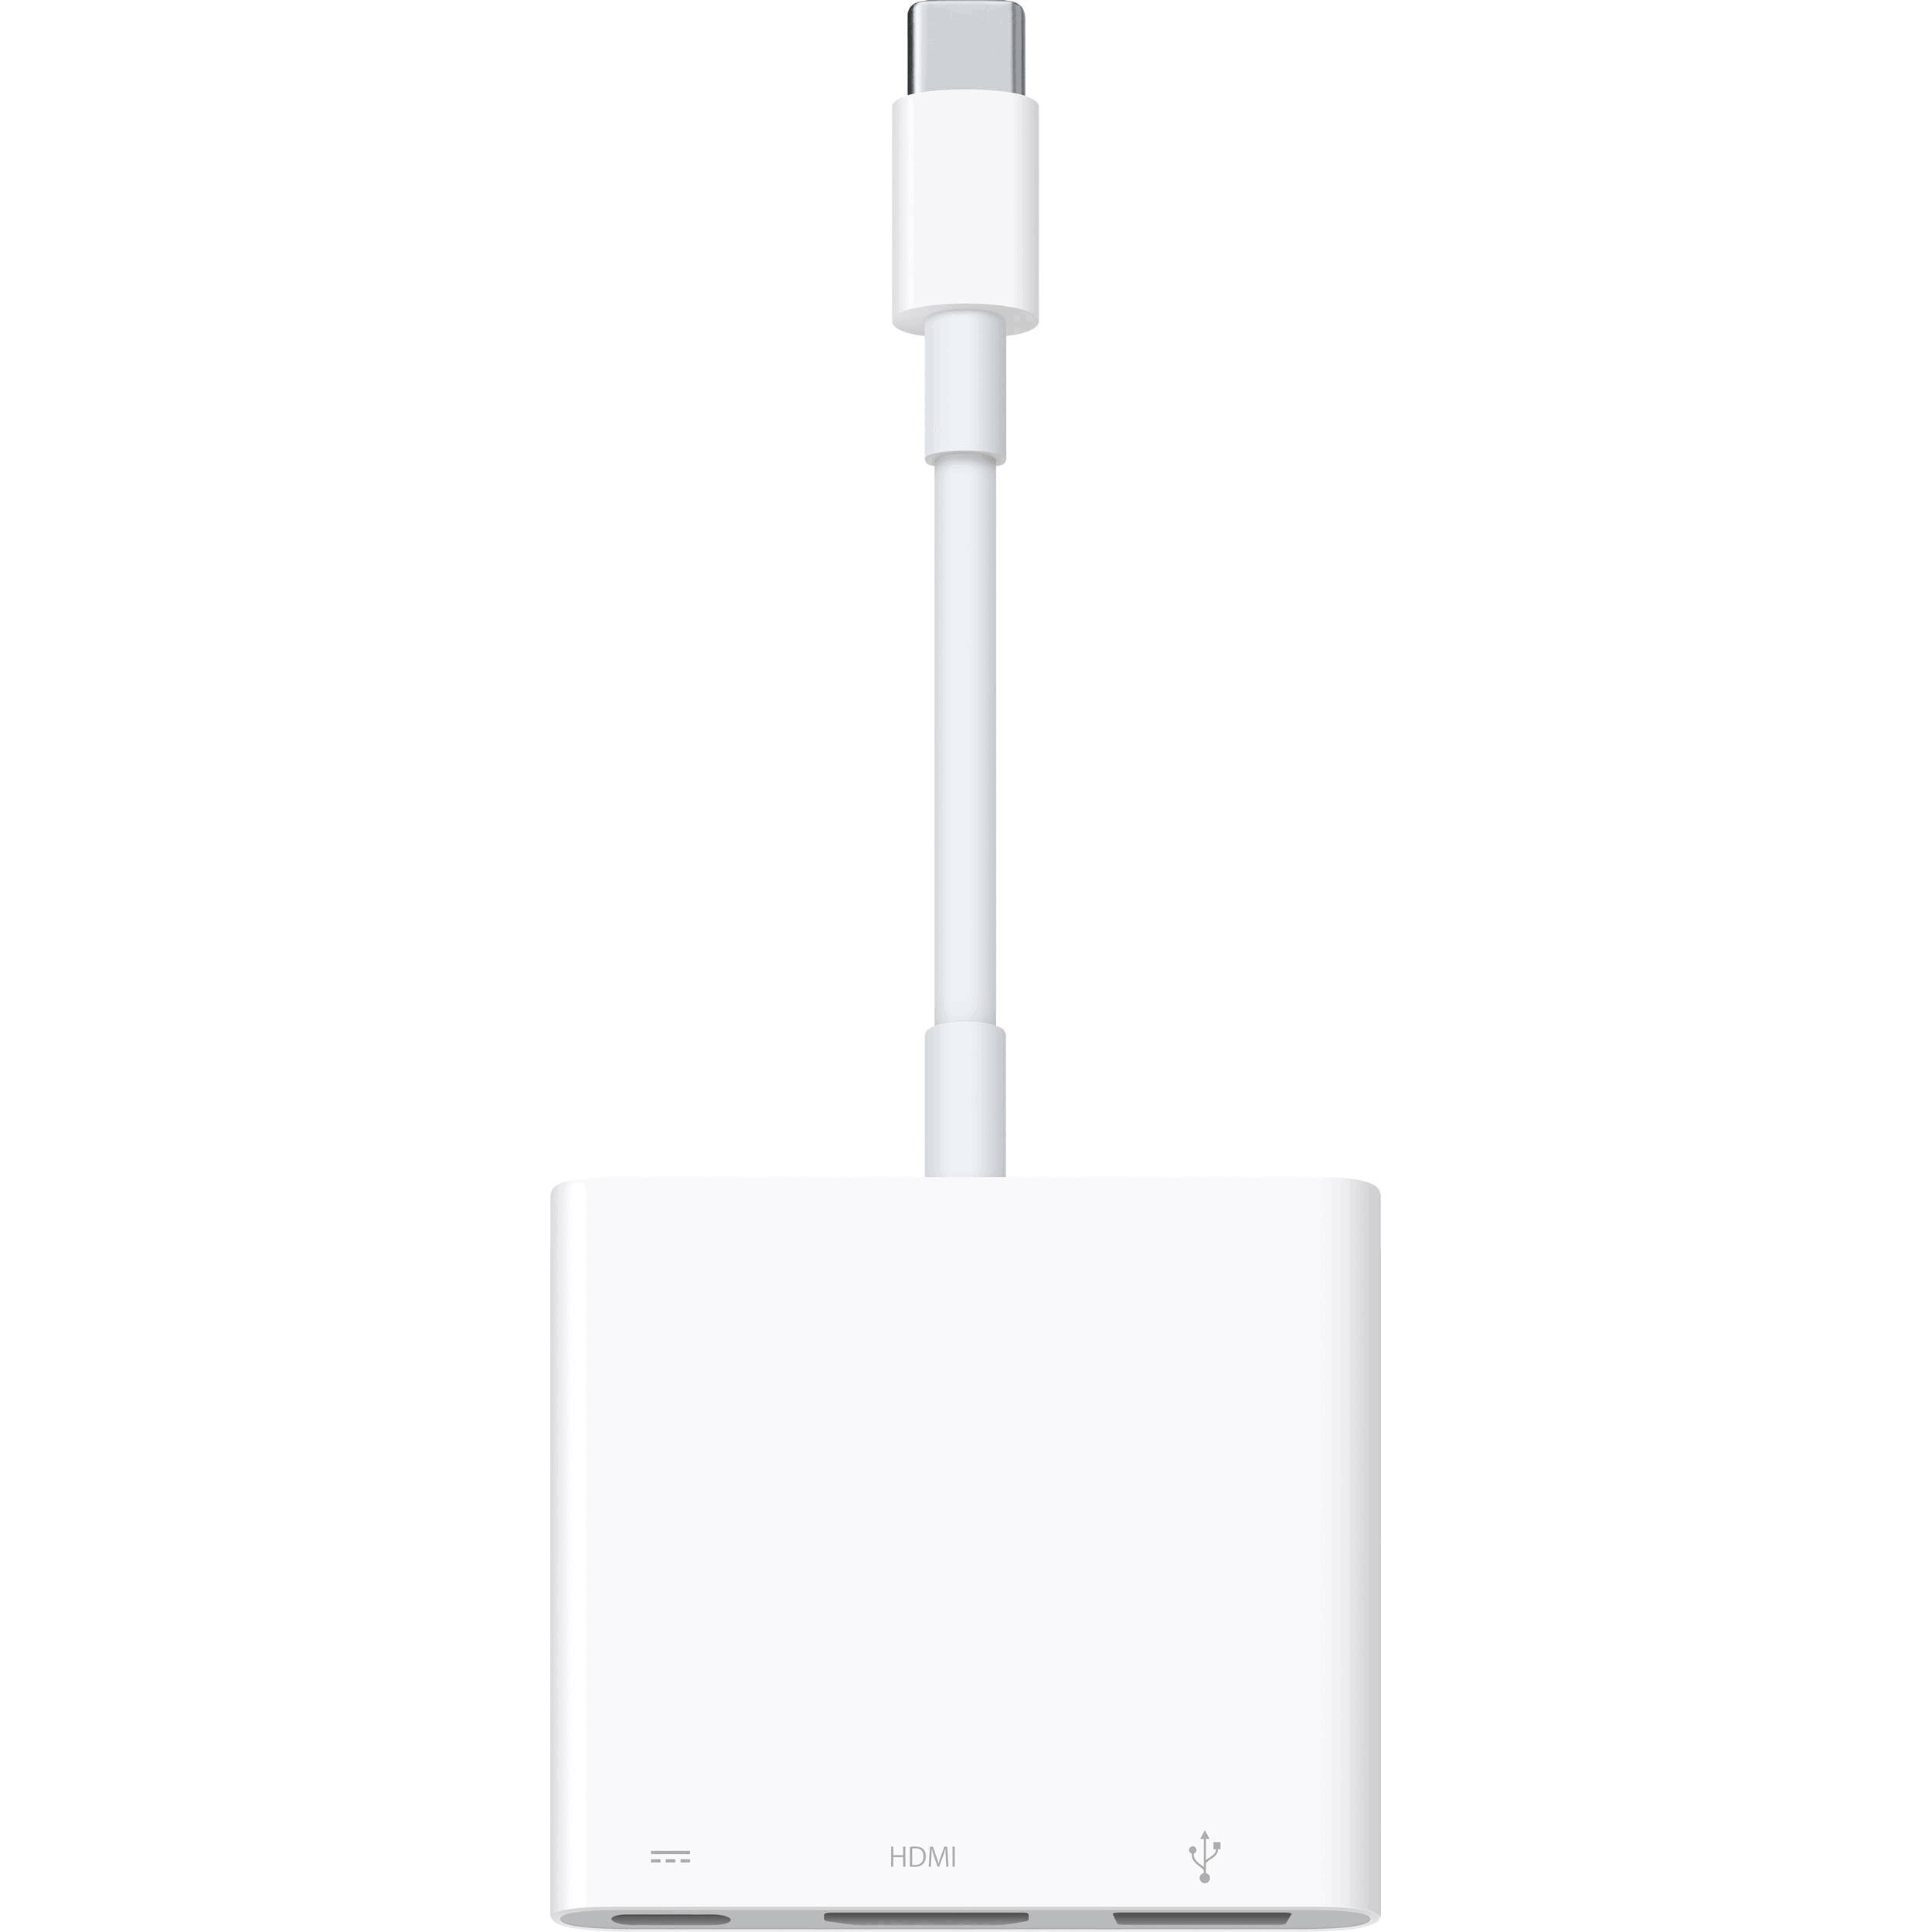 Apple USB Type-C Digital AV Multiport Adapter